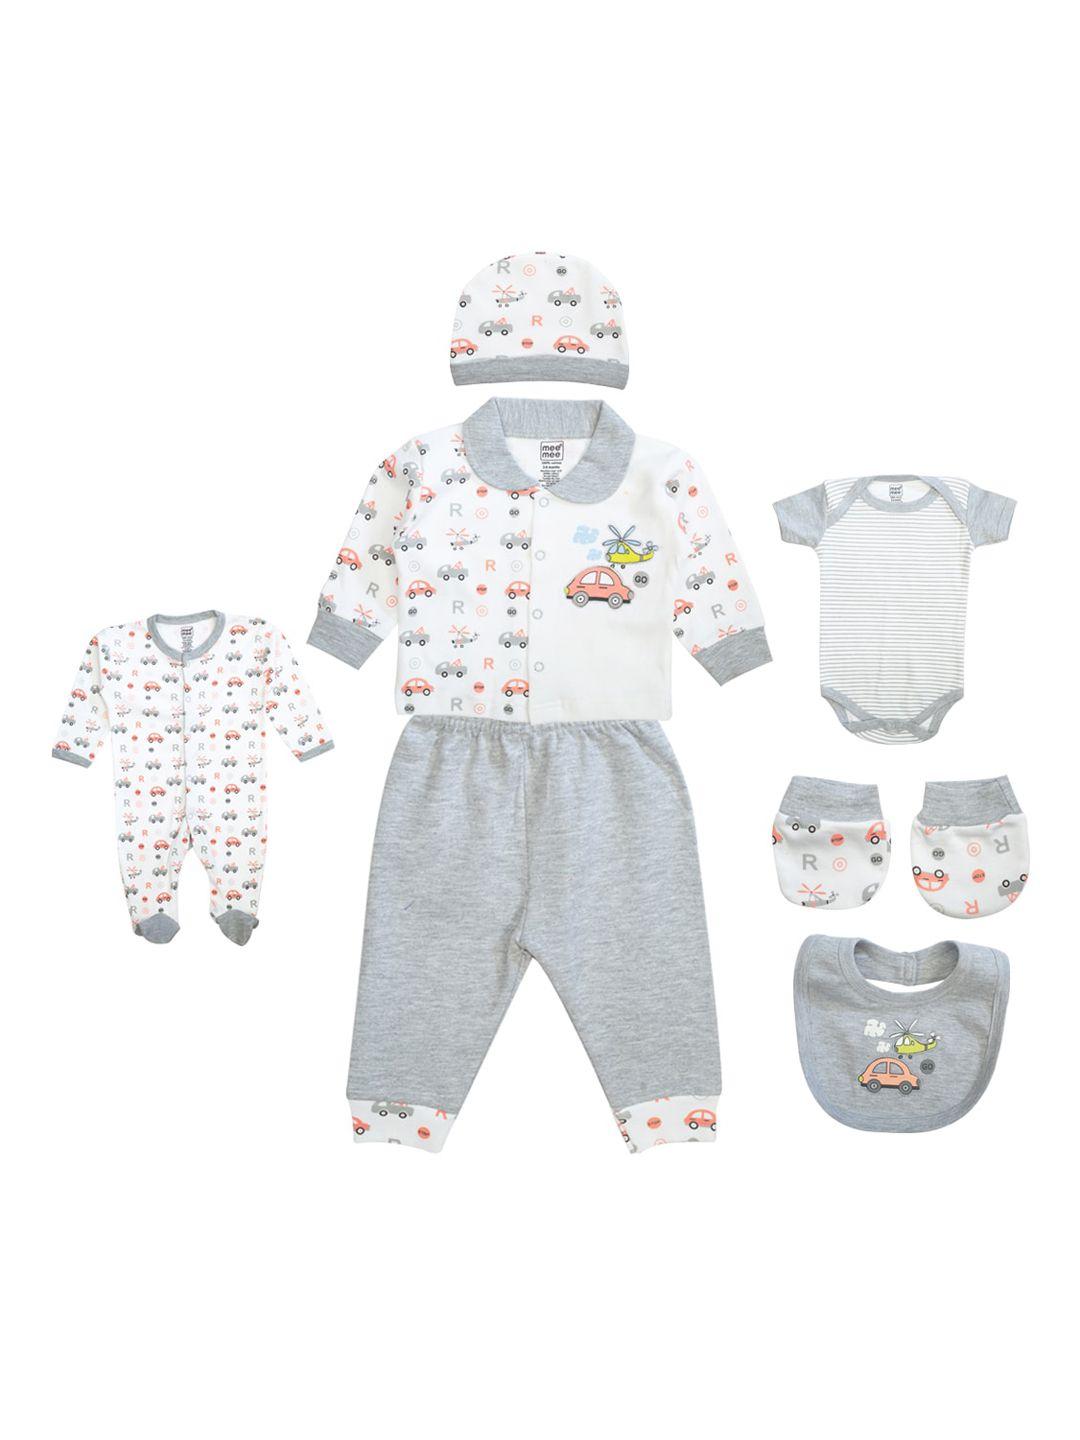 meemee infant kids white & grey printed clothing set